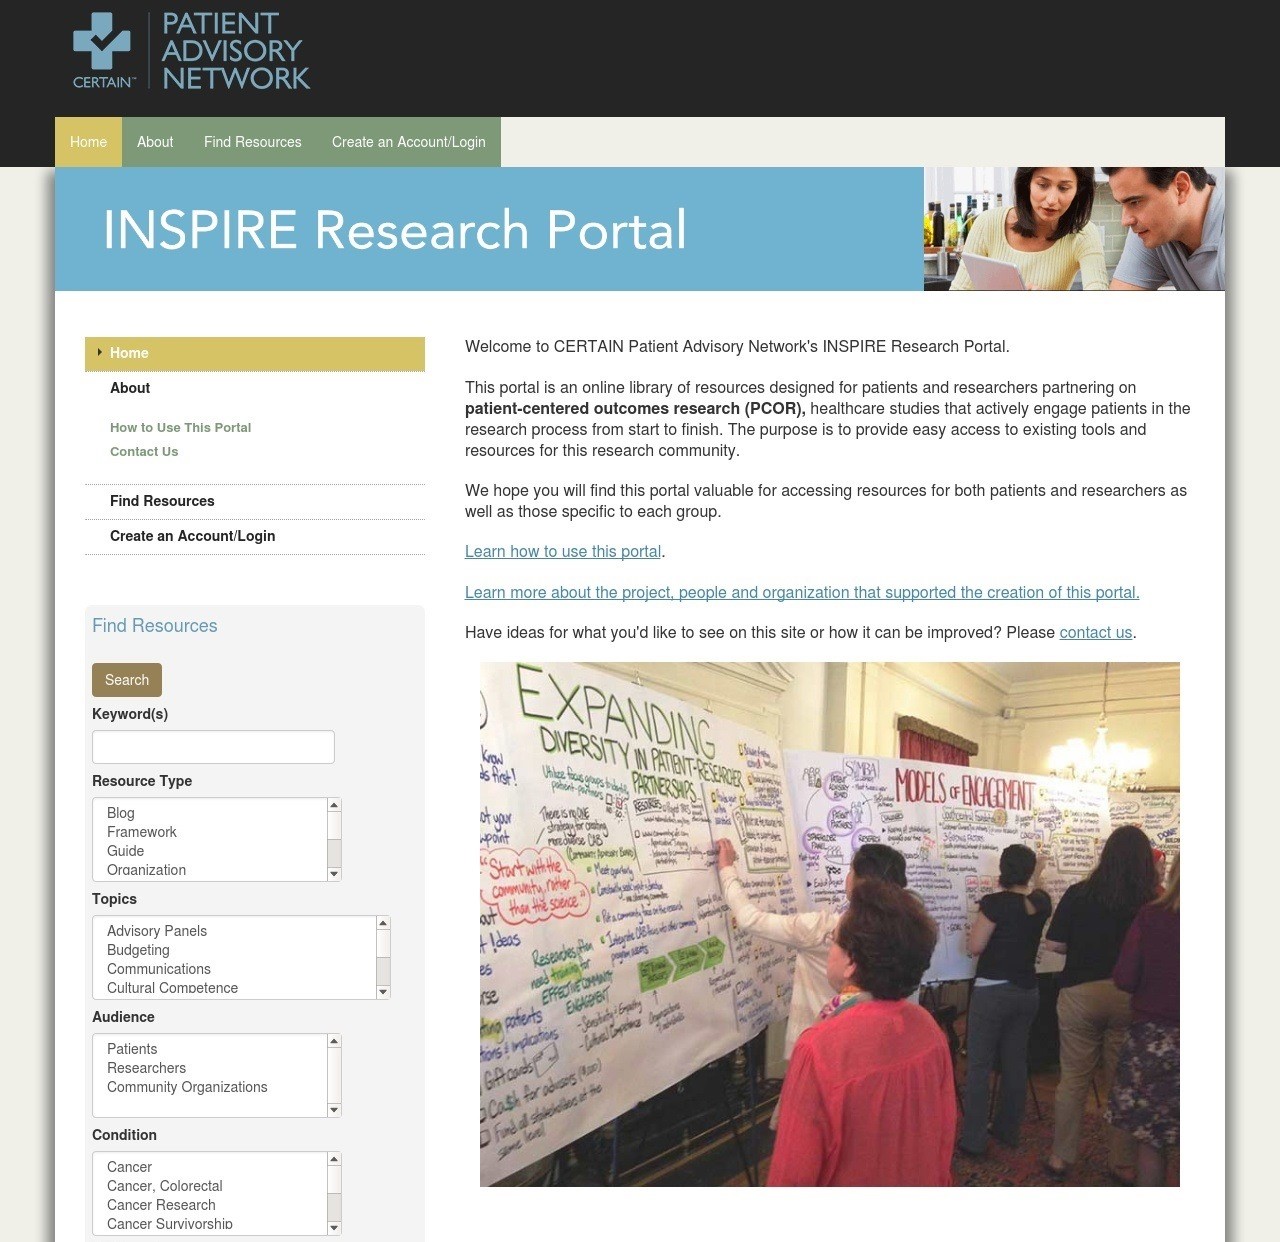 INSPIRE Research Portal